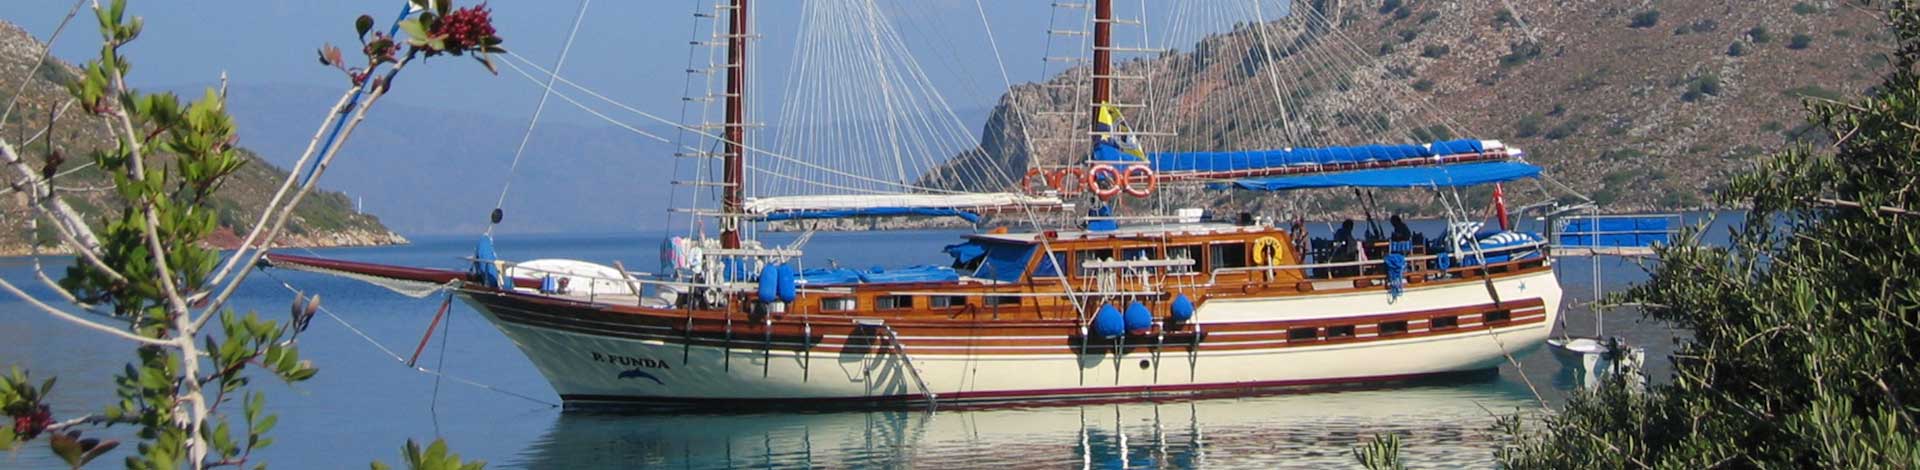 Gulet Cruises On The Bozburun Peninsula, Turkey